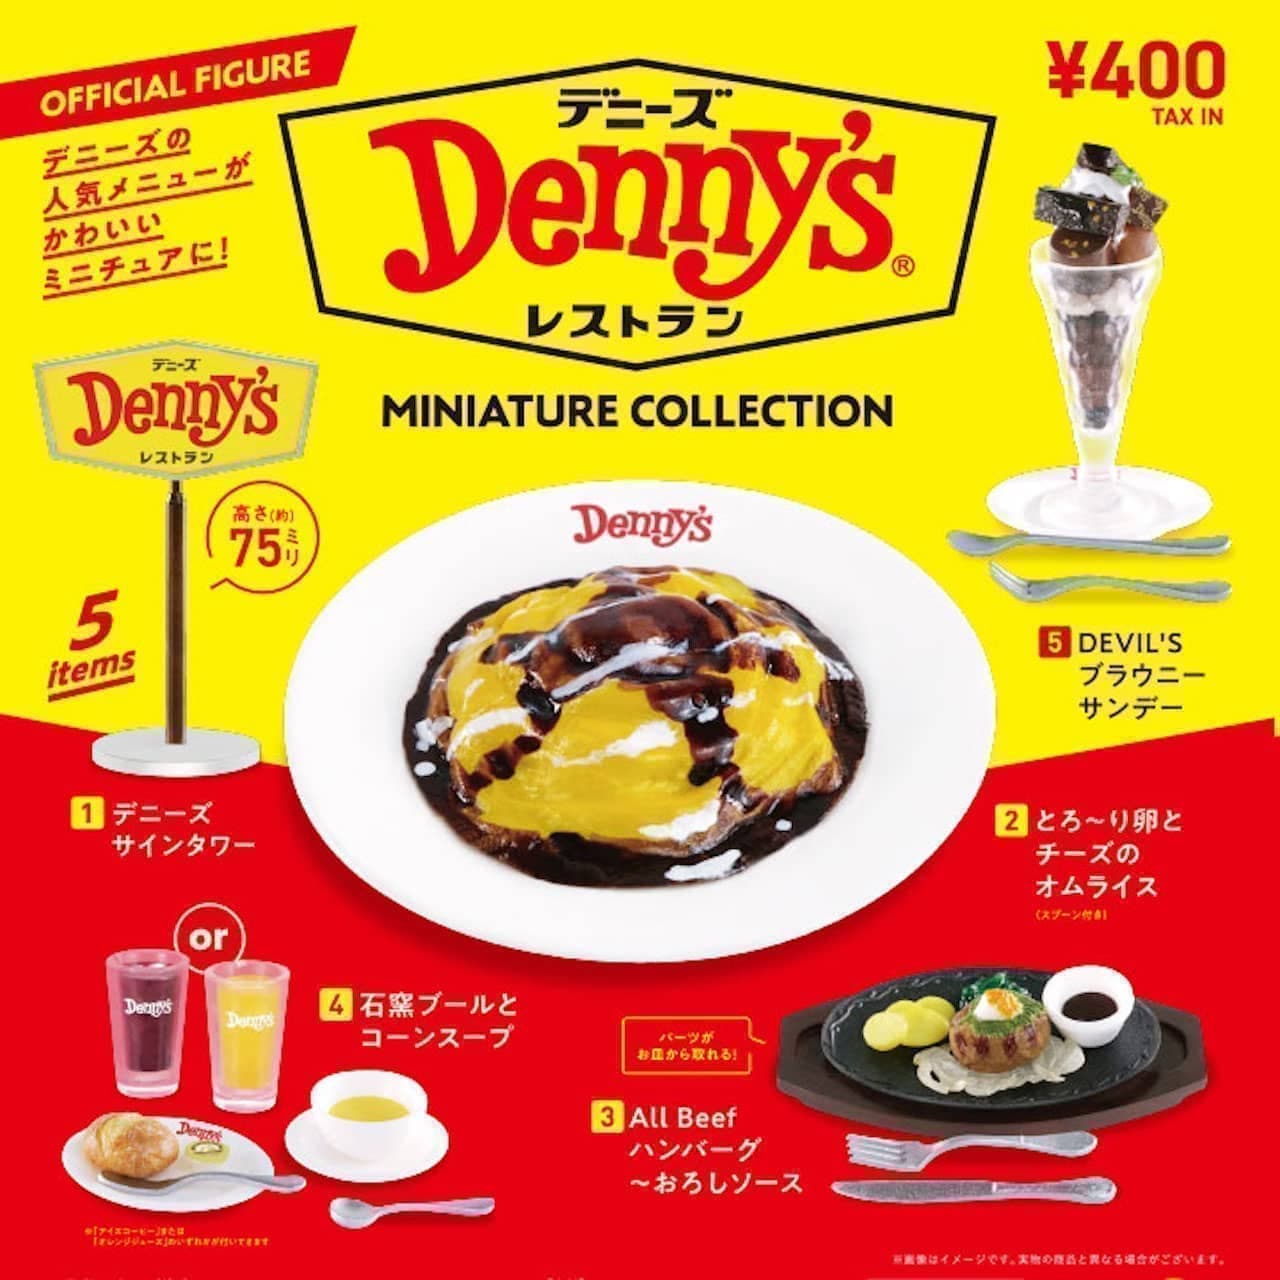 Ken Elephant "Denny's Miniature Collection".